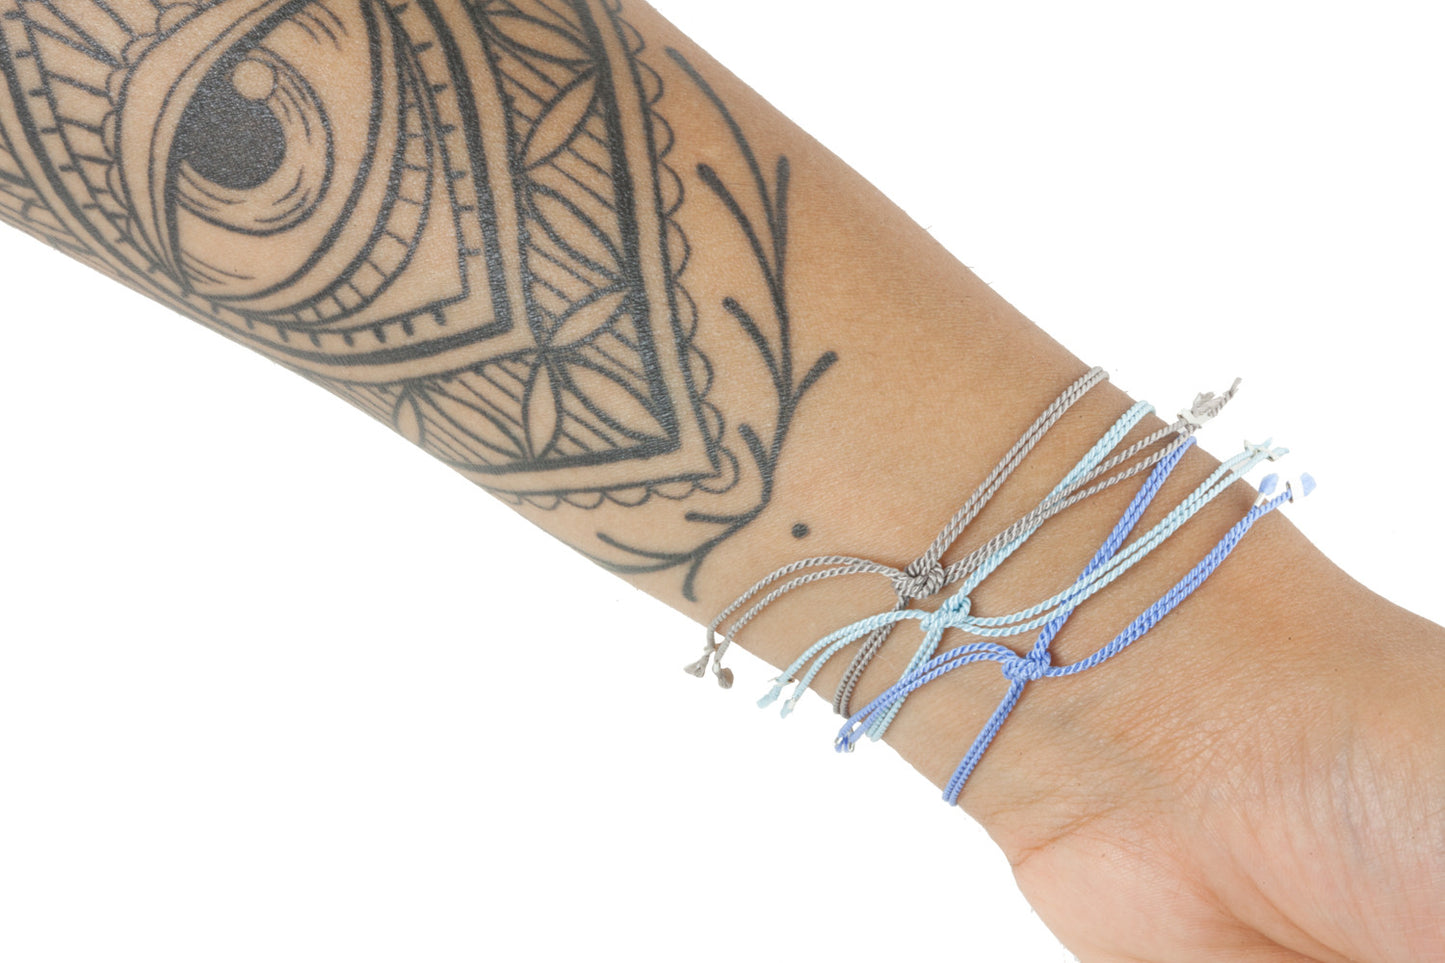 Cuddle charm bracelet on Cornflower Blue silk thread